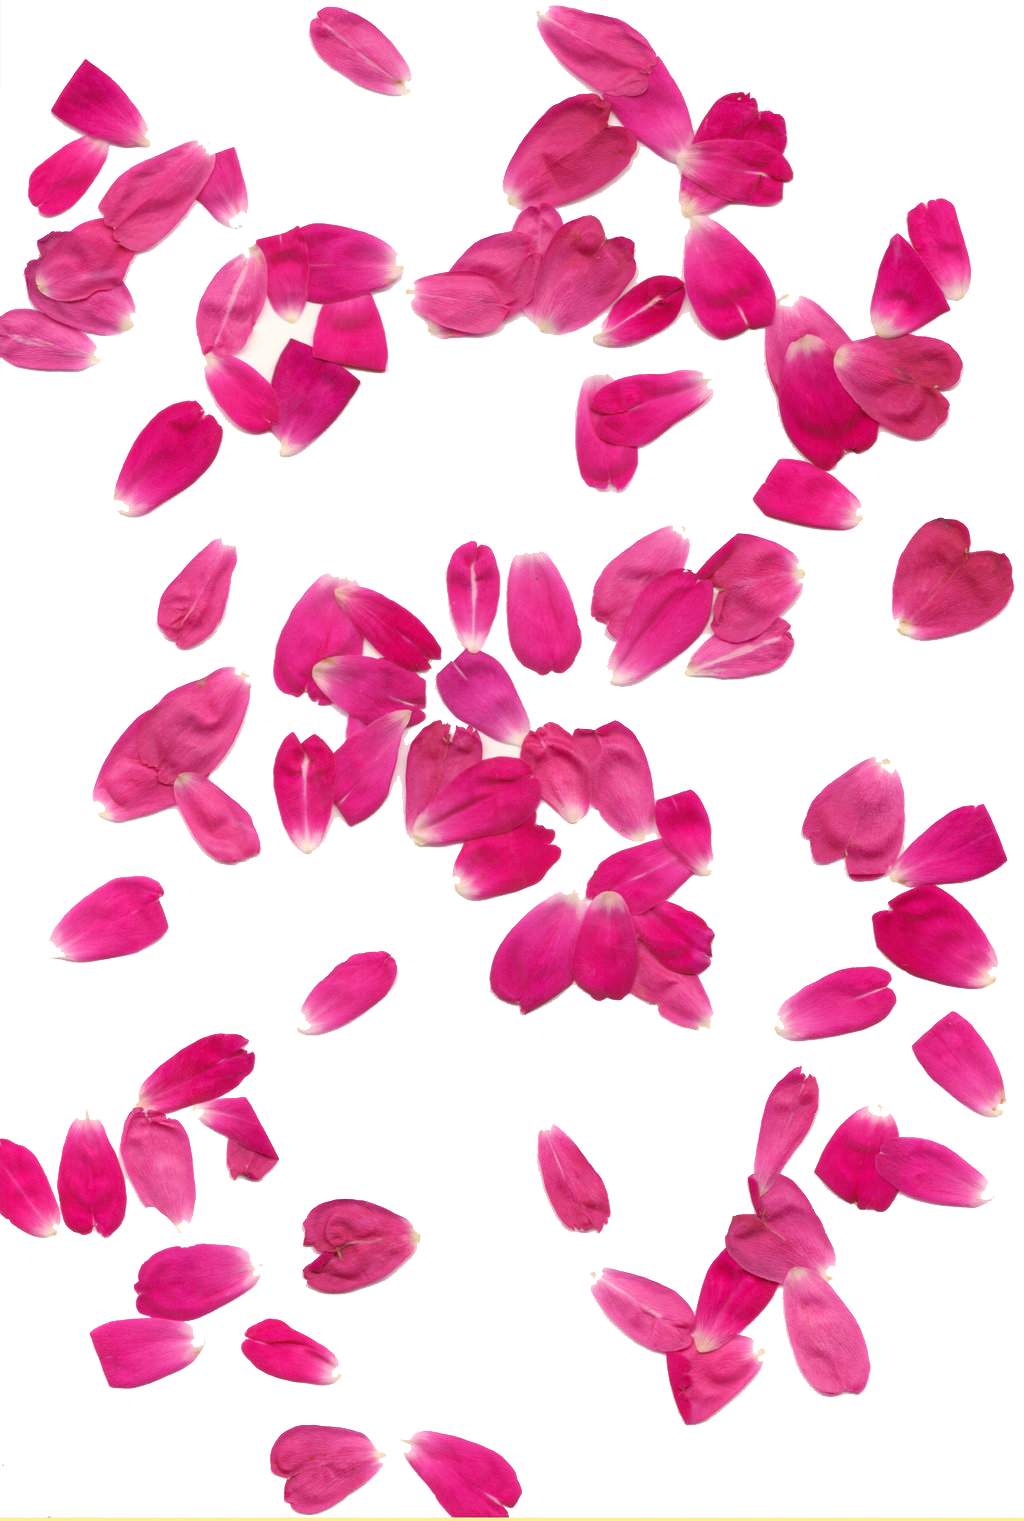 Rose Petals PNG Picture